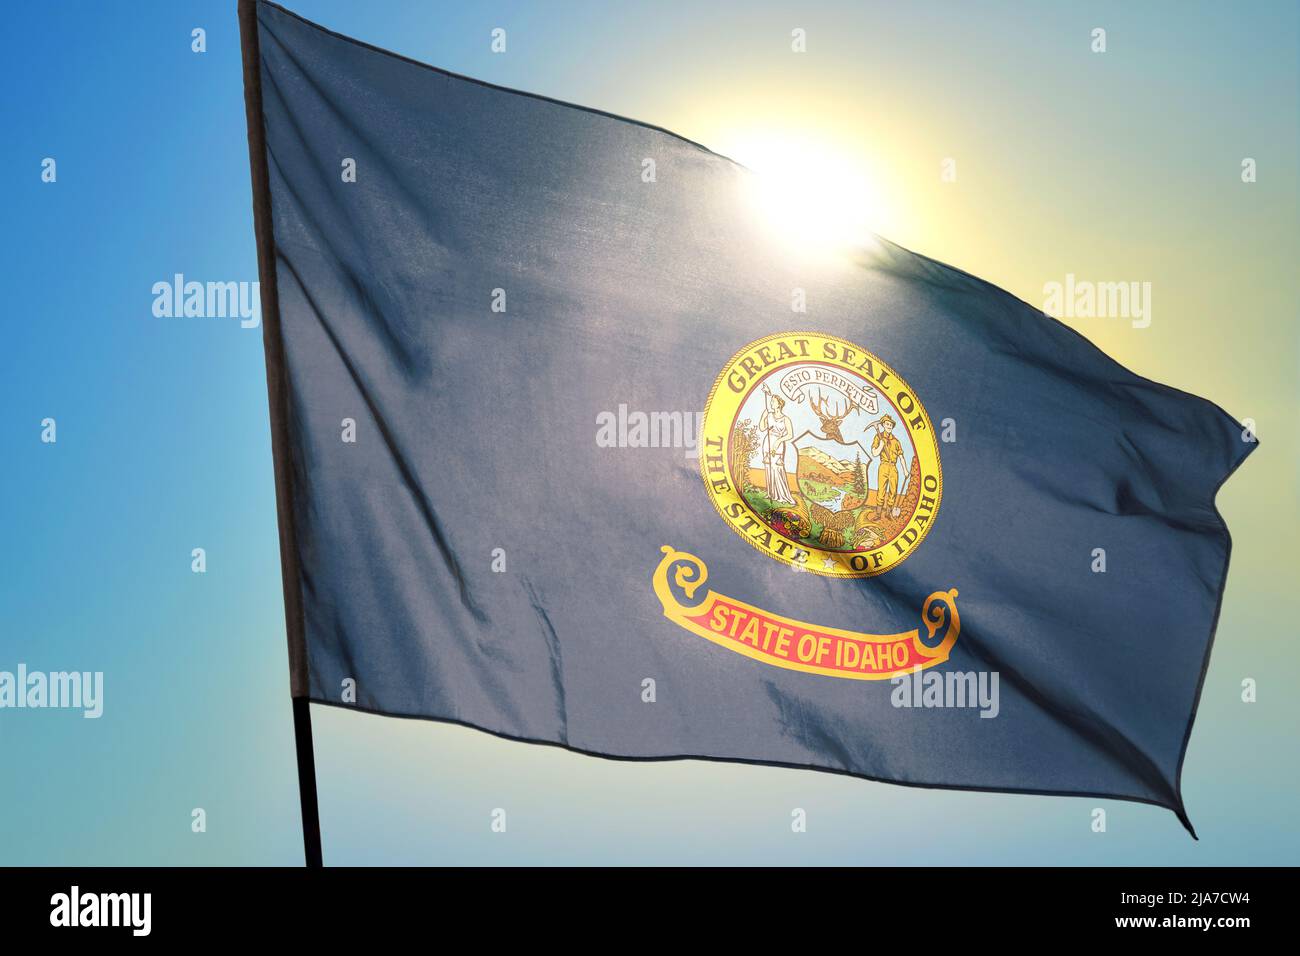 Idaho state of United States flag waving on the wind Stock Photo